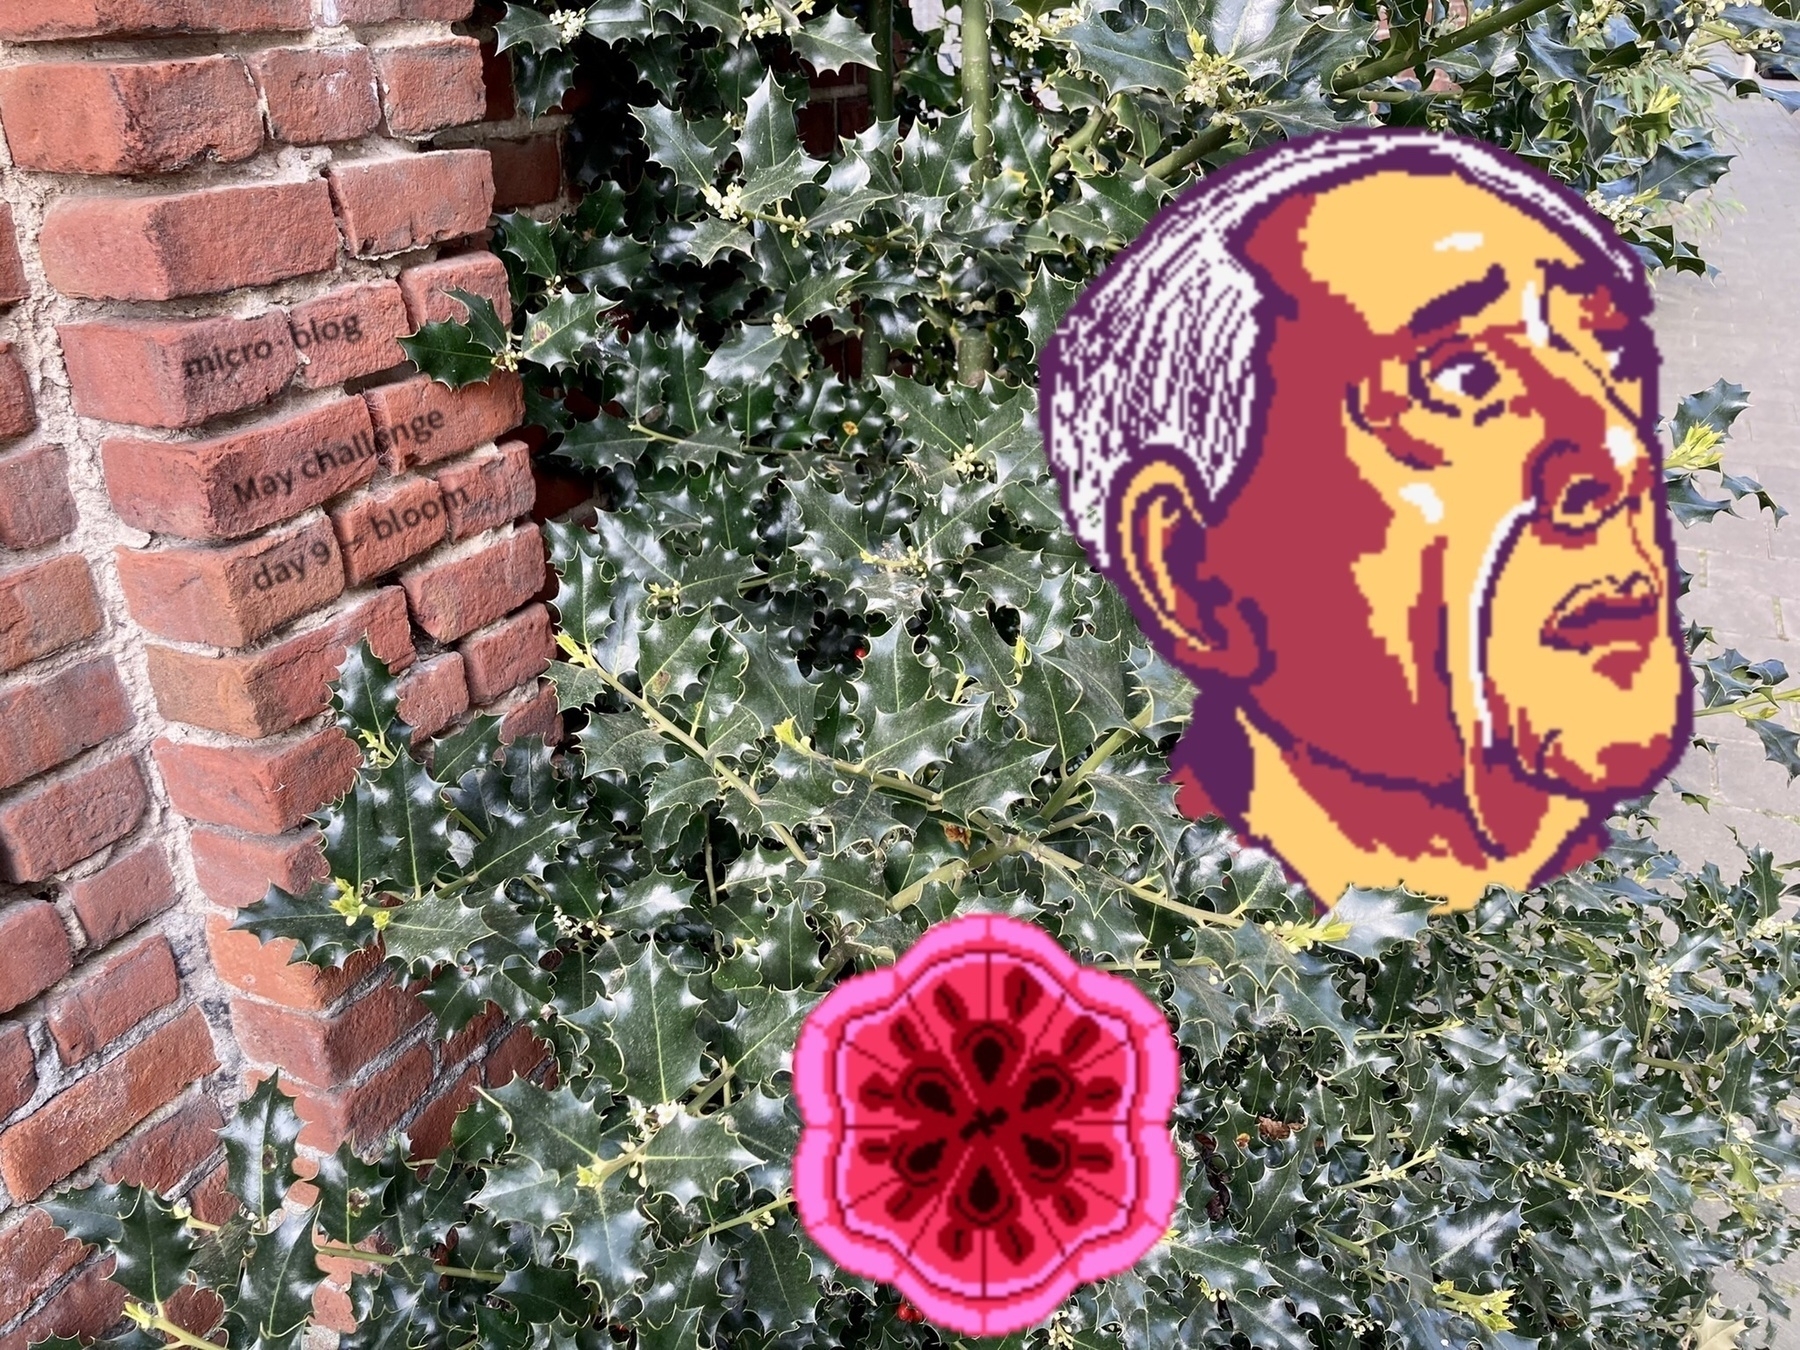 flower bloom and Harold Bloom pixel art in a bush